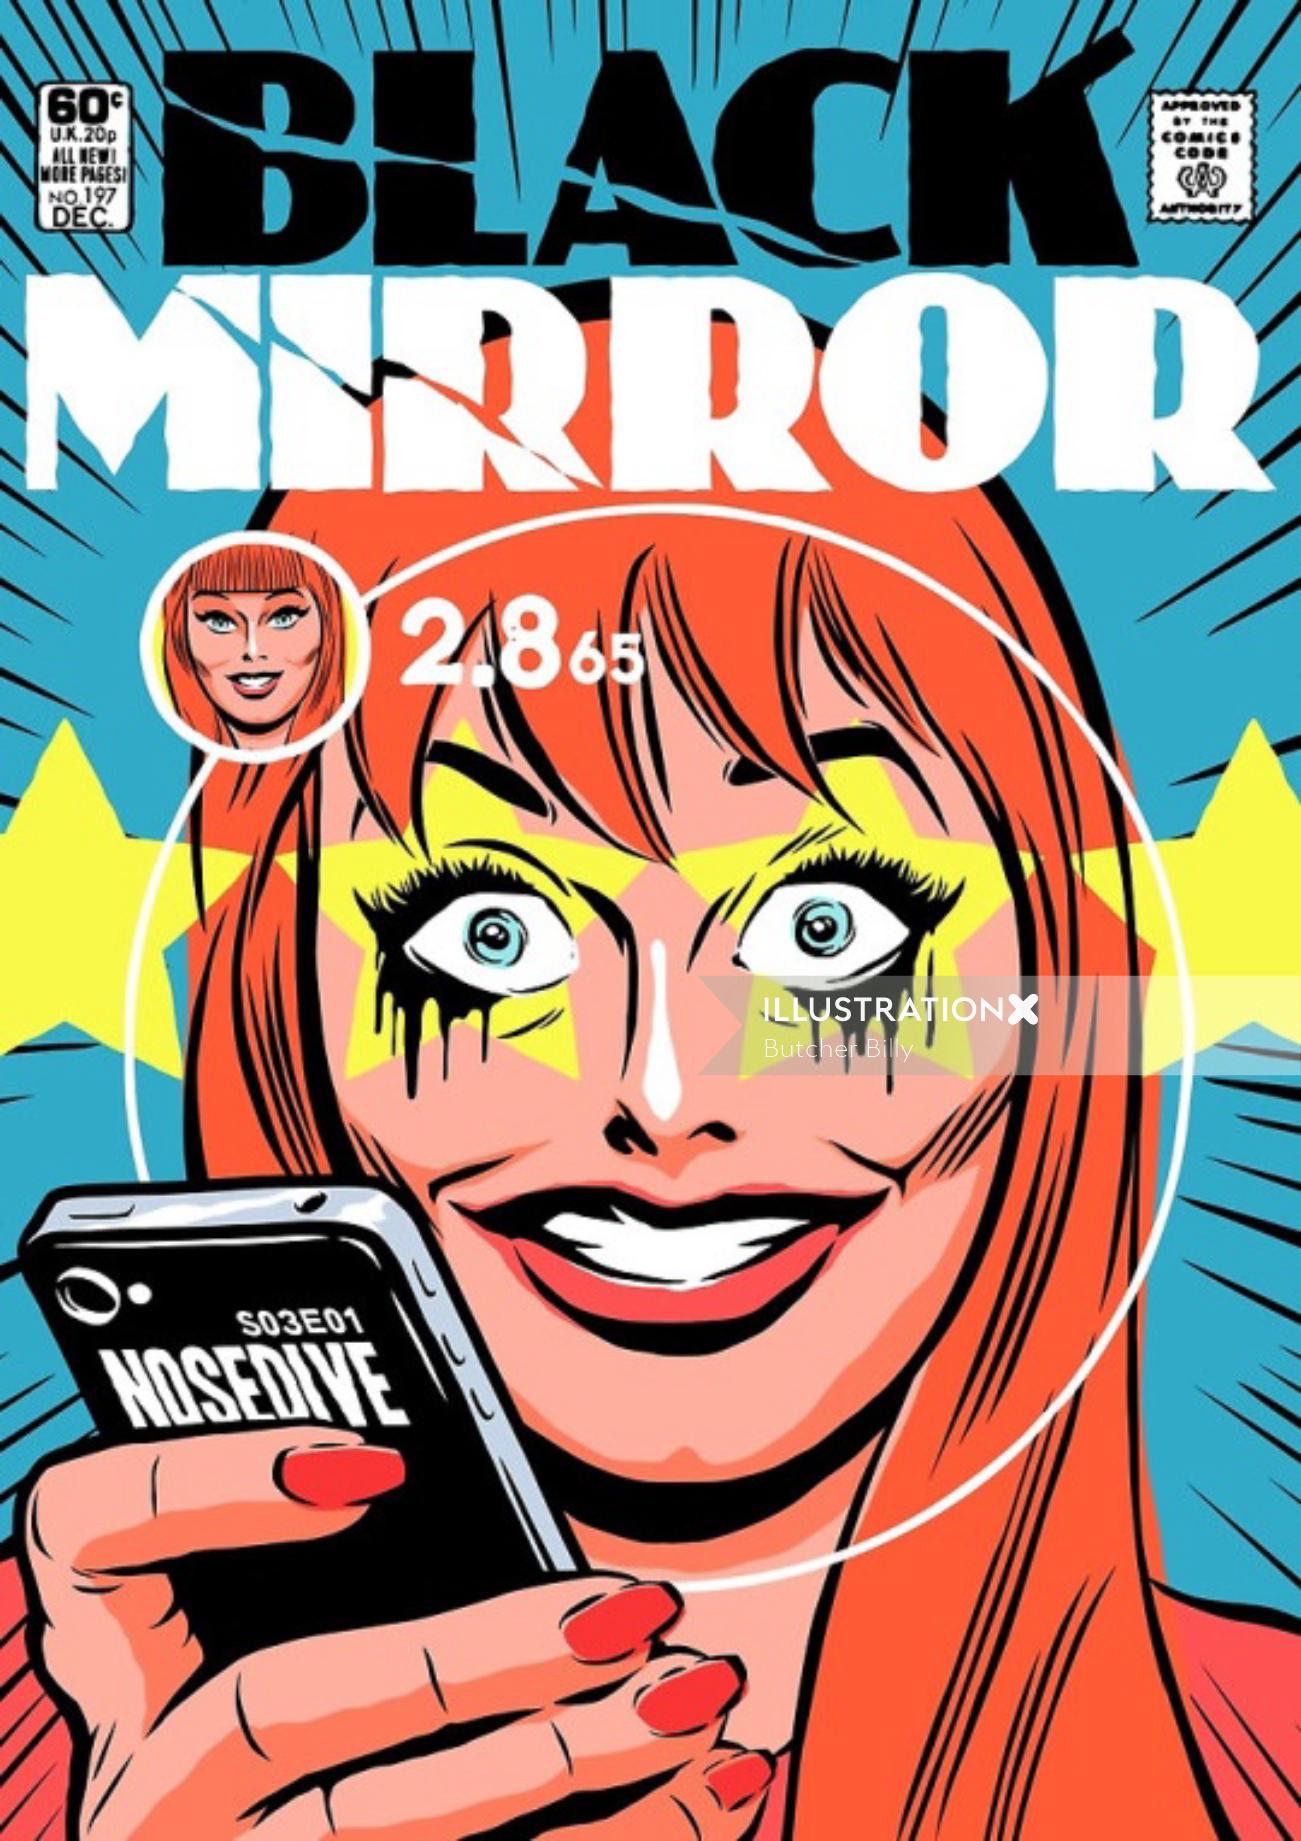 Black Mirror episode Nosedive as a vintage comic book cover